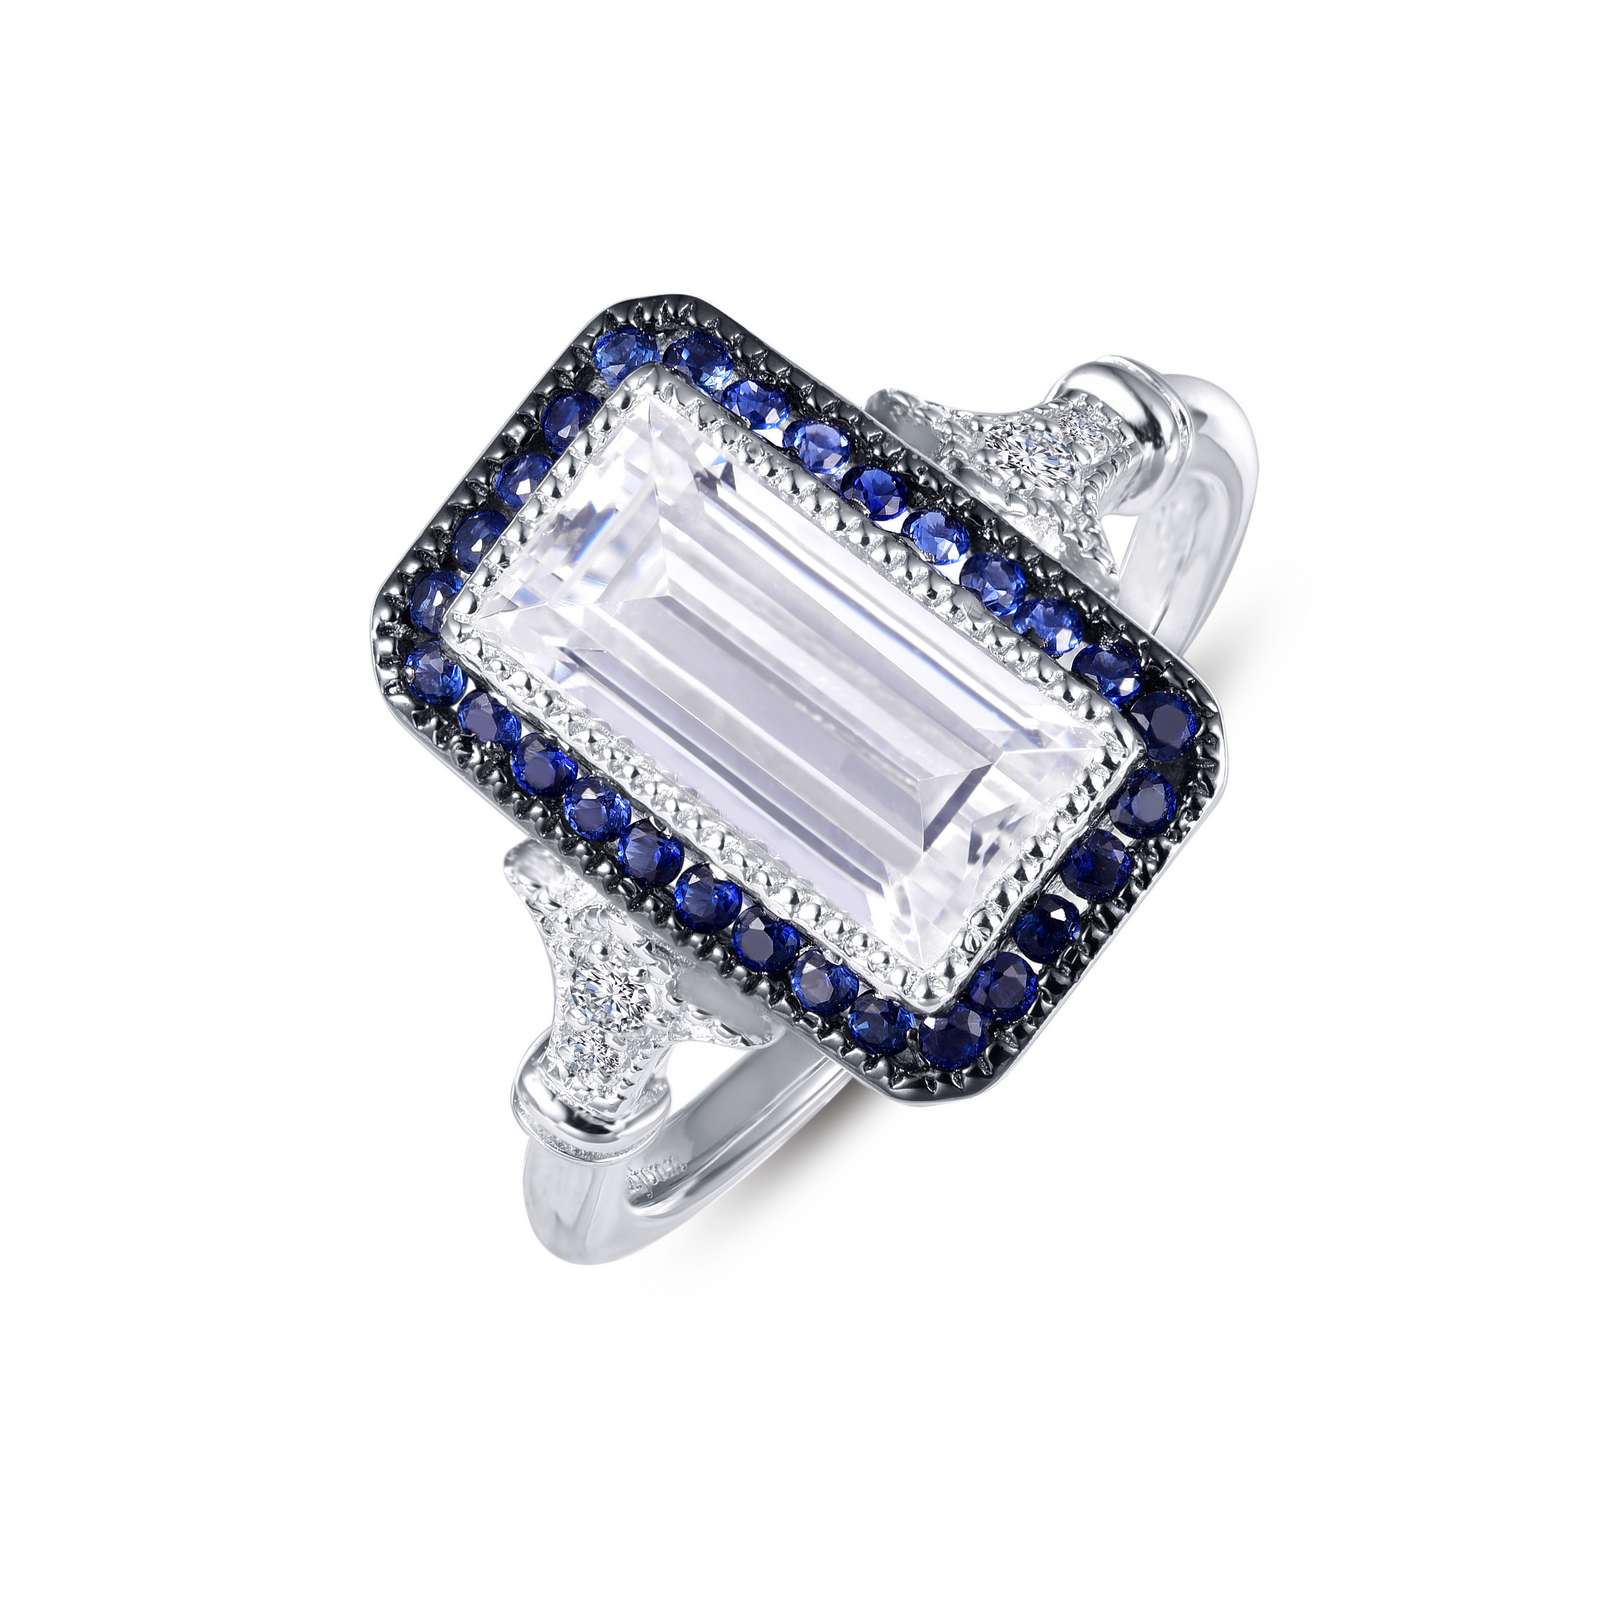 Vintage Inspired Engagement Ring Mendham Jewelers Mendham, NJ